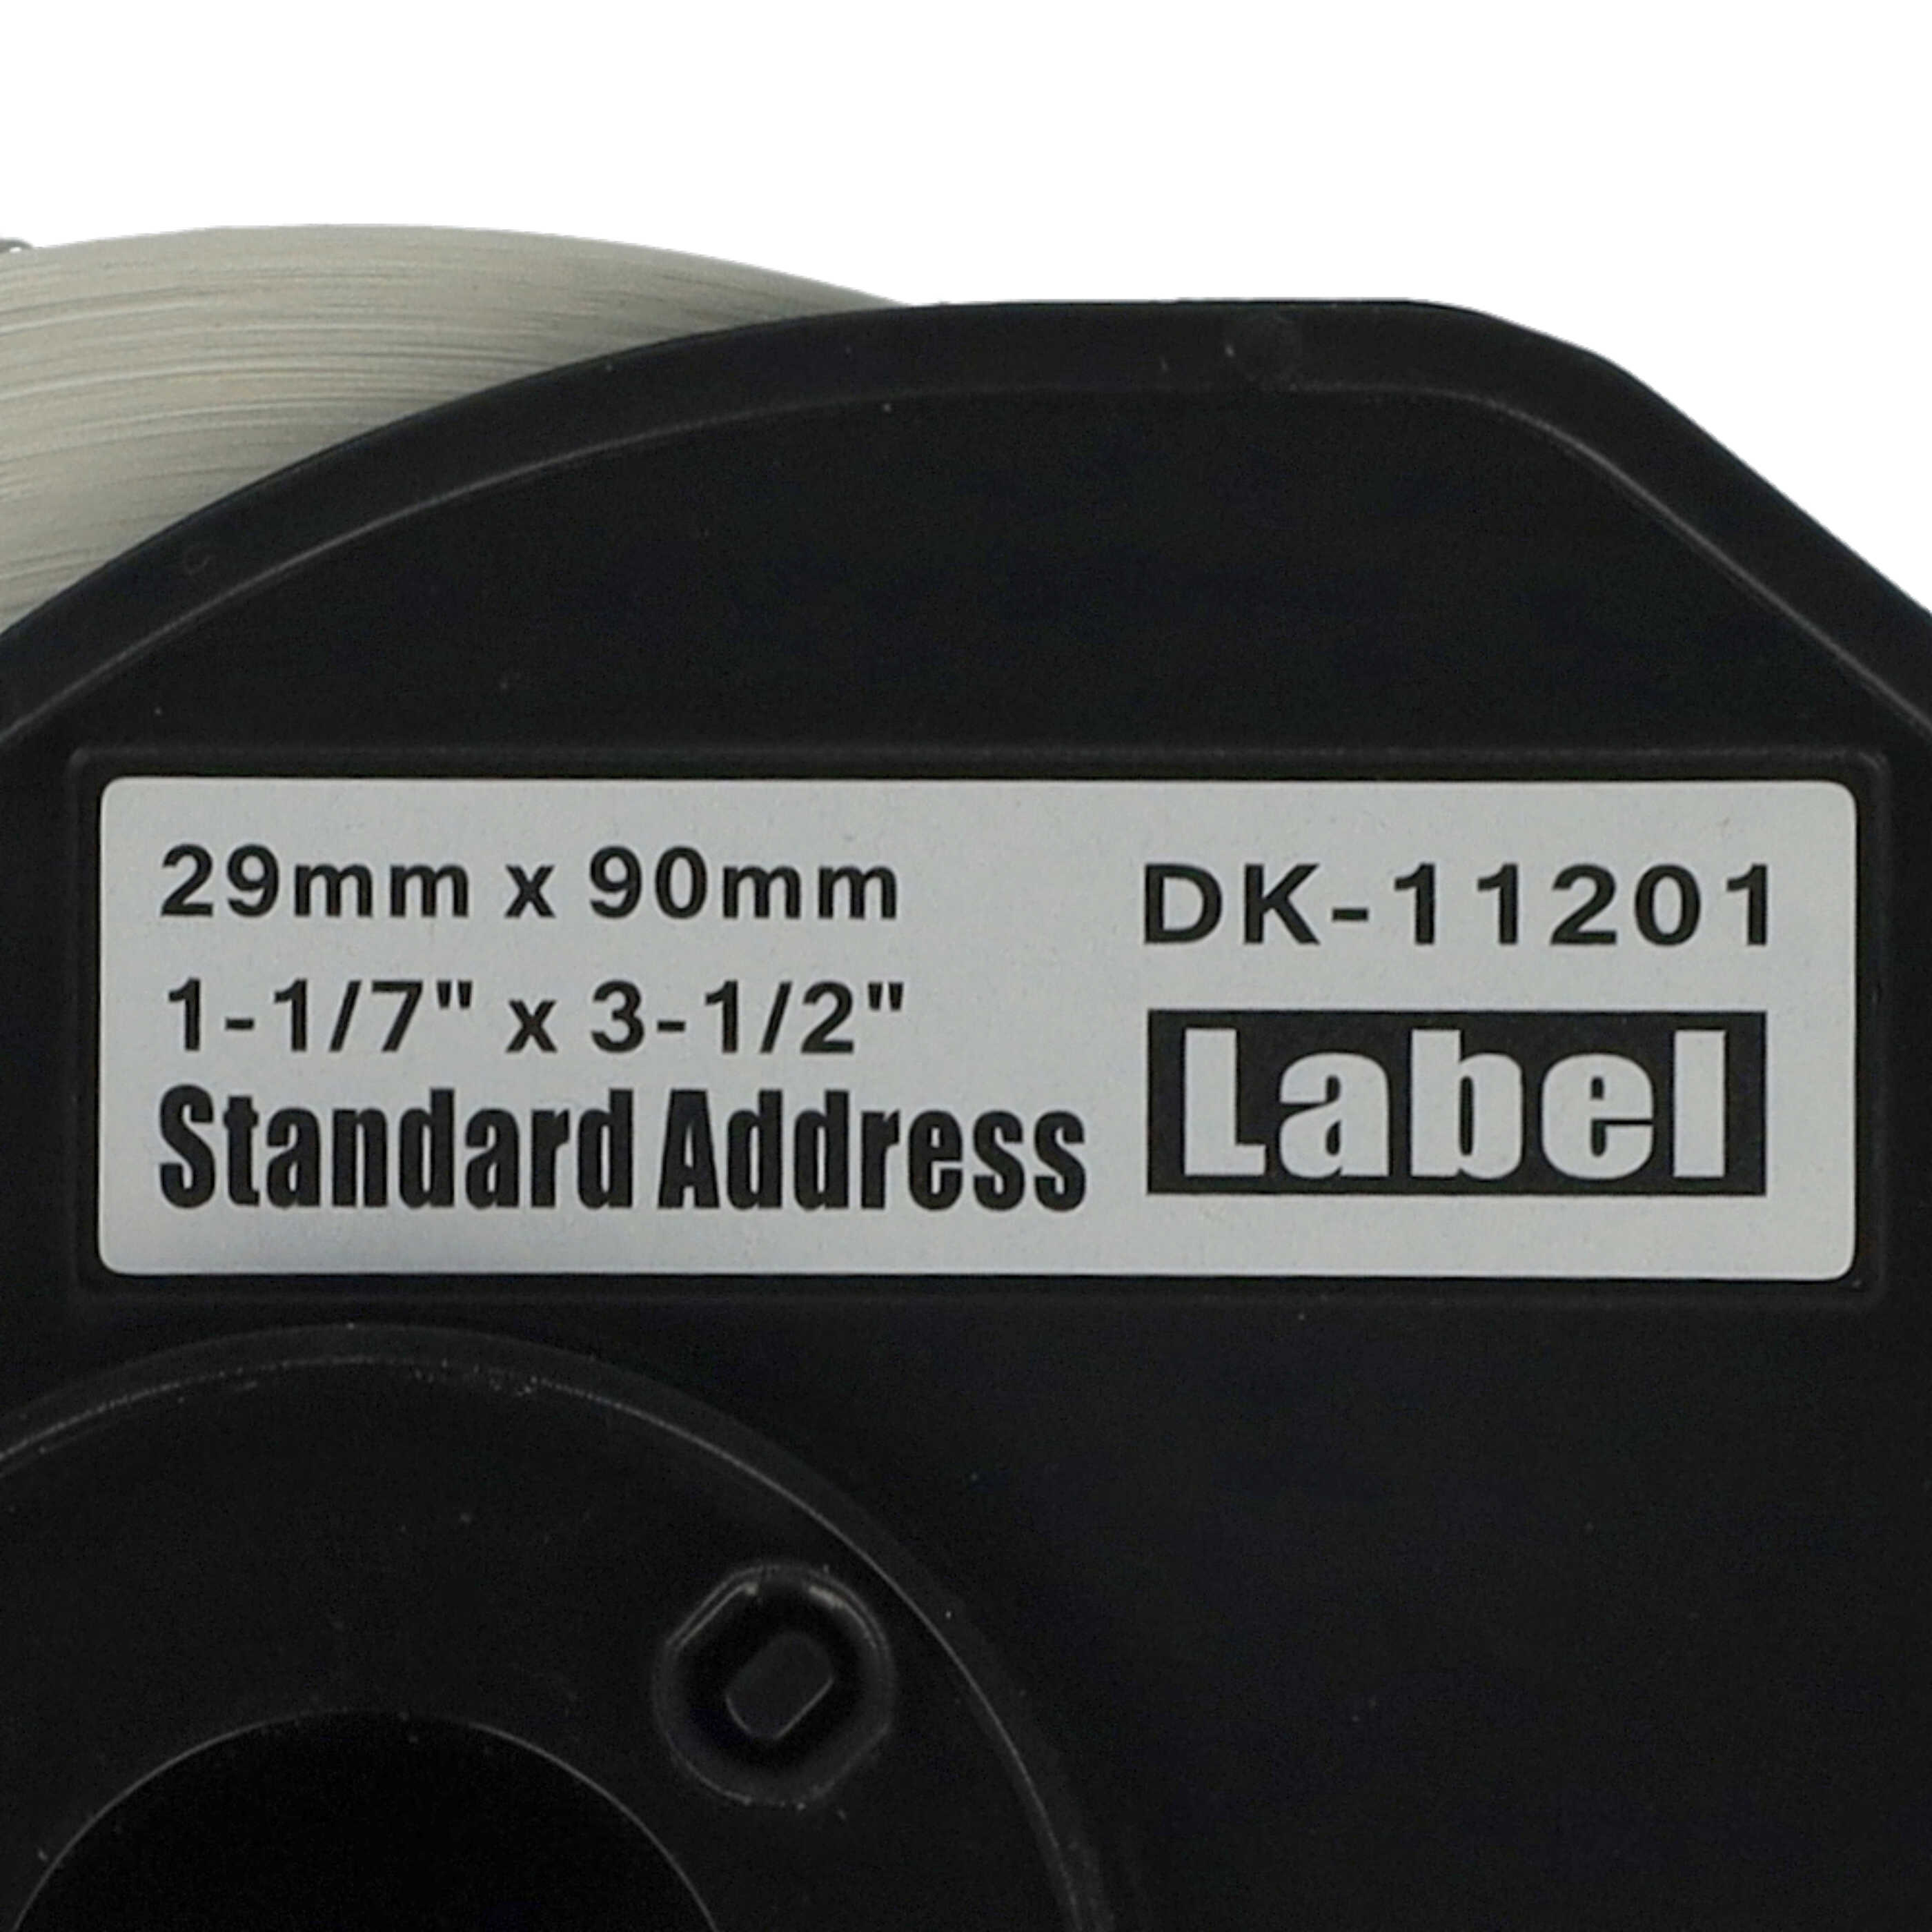 10x Etiquetas reemplaza Brother DK-11201 para impresora etiquetas - 29 mm x 90 mm + soporte